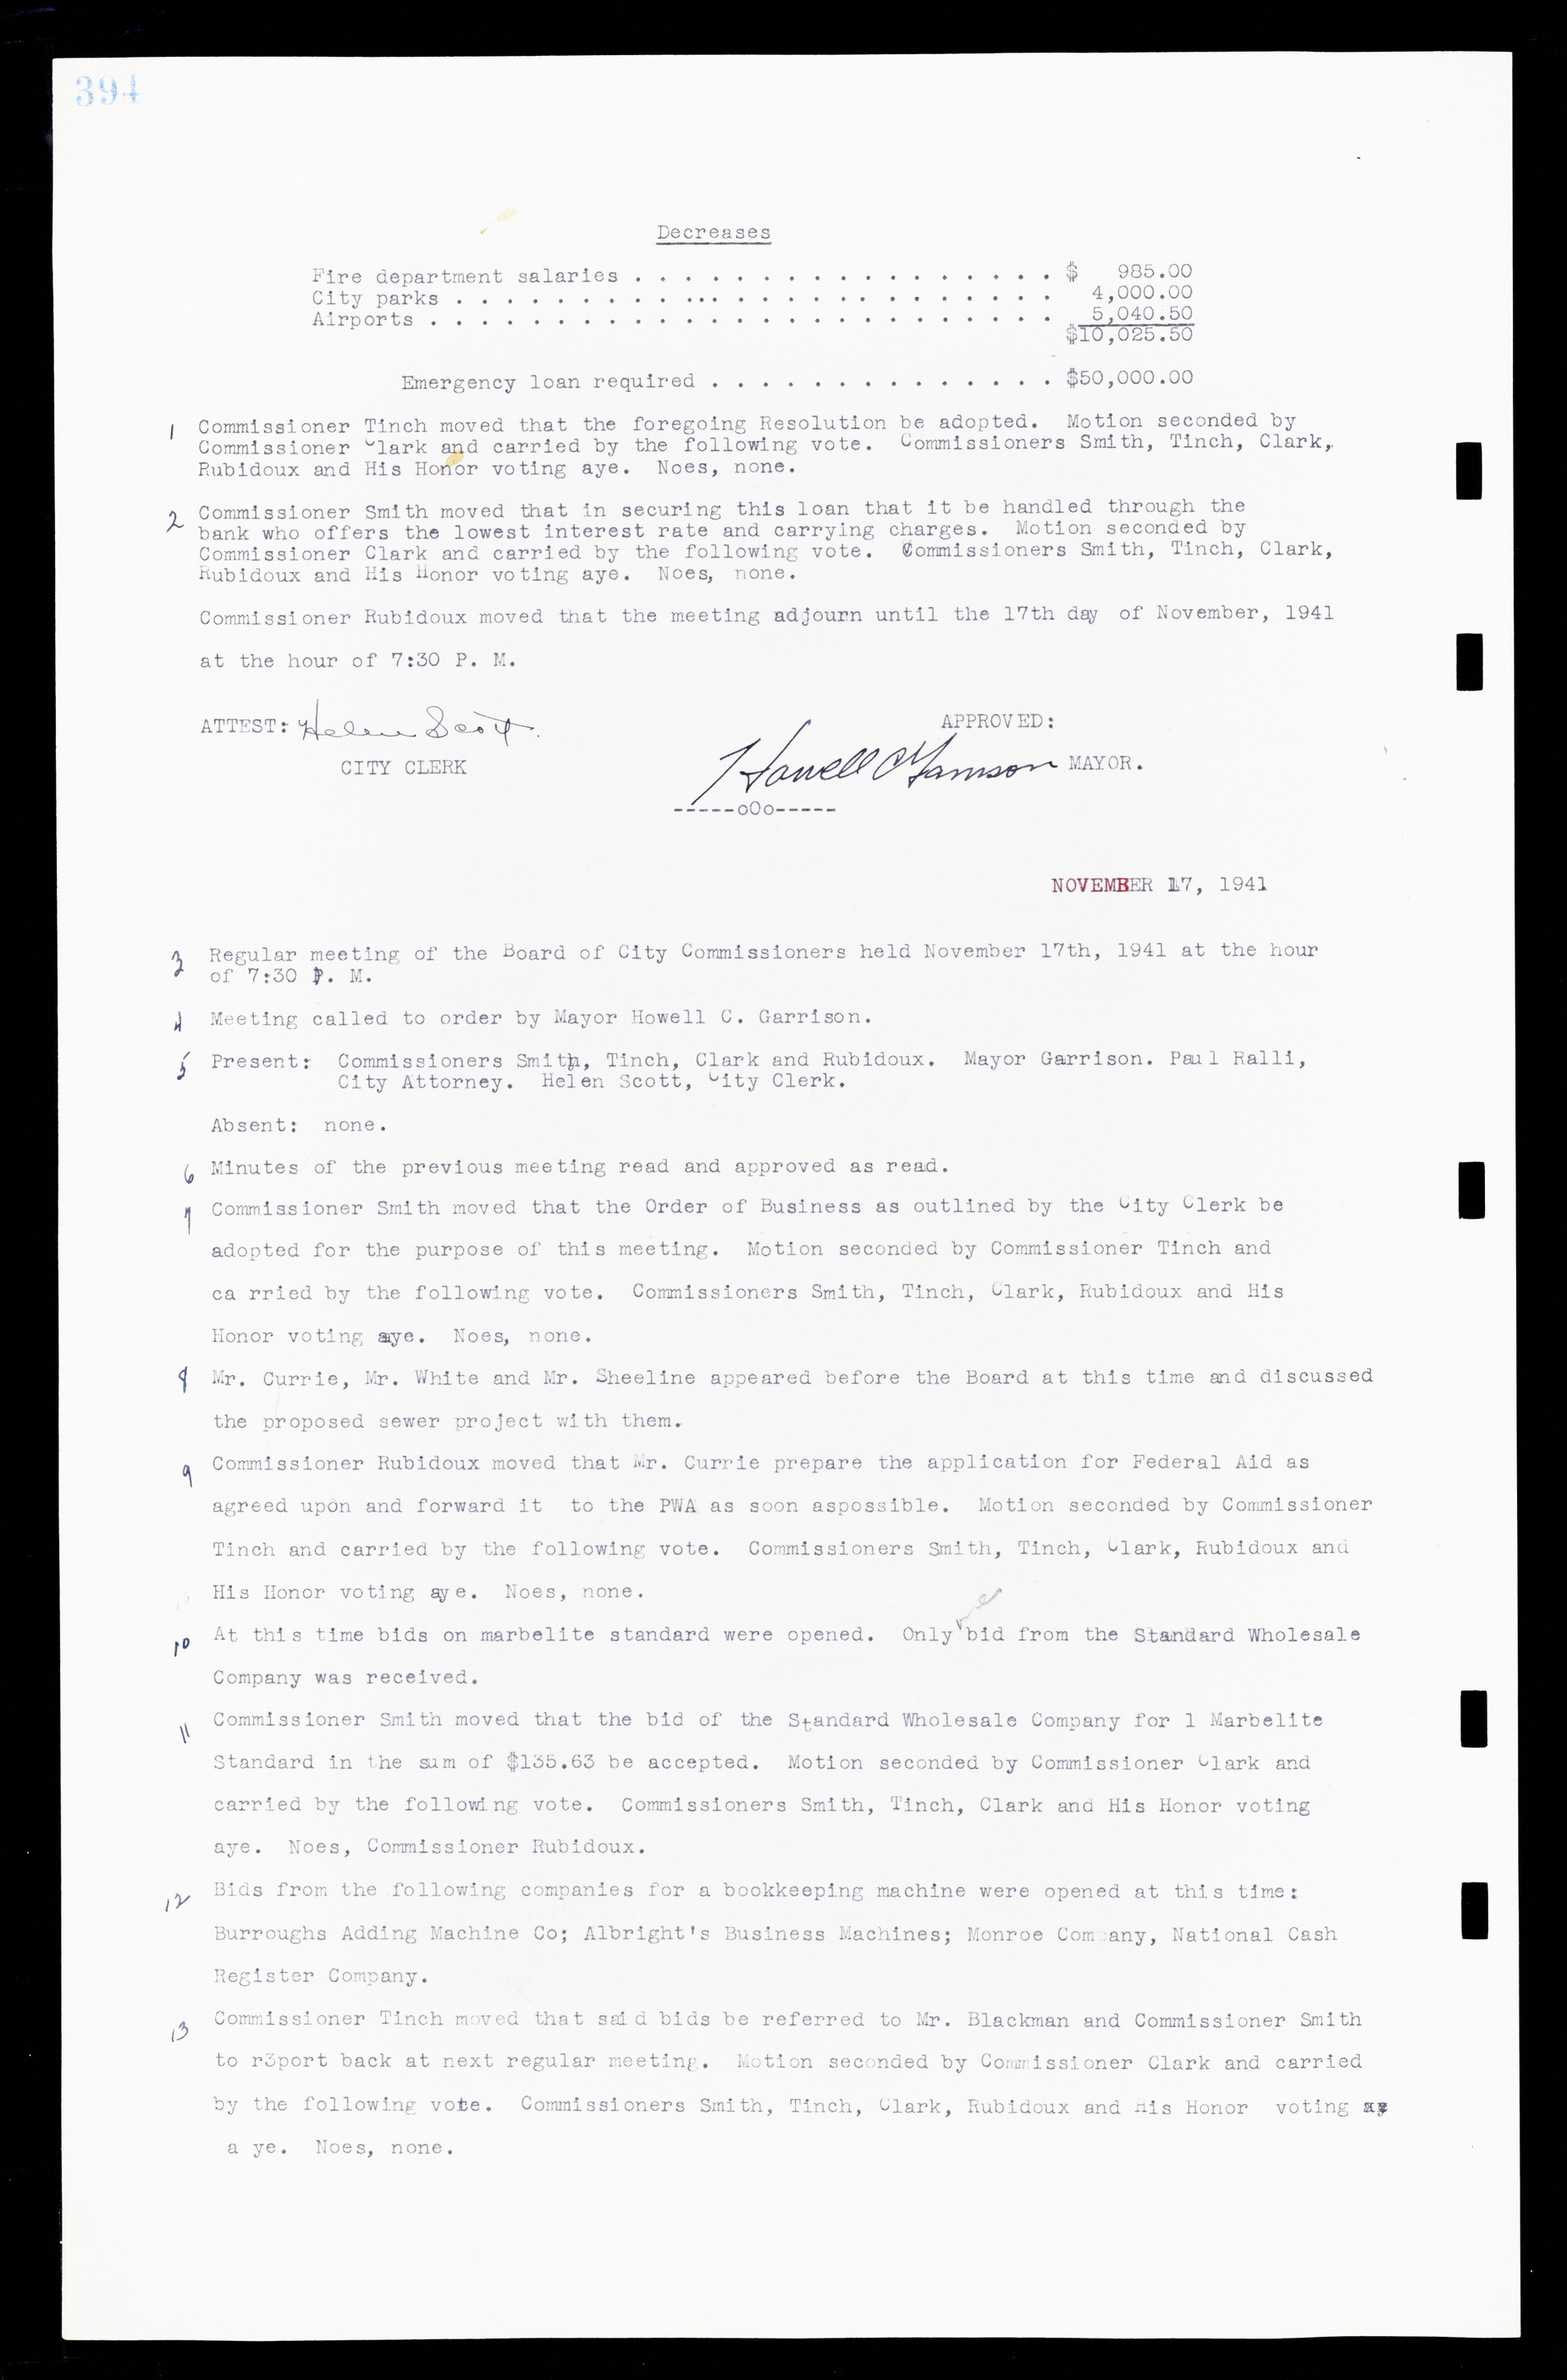 Las Vegas City Commission Minutes, February 17, 1937 to August 4, 1942, lvc000004-420